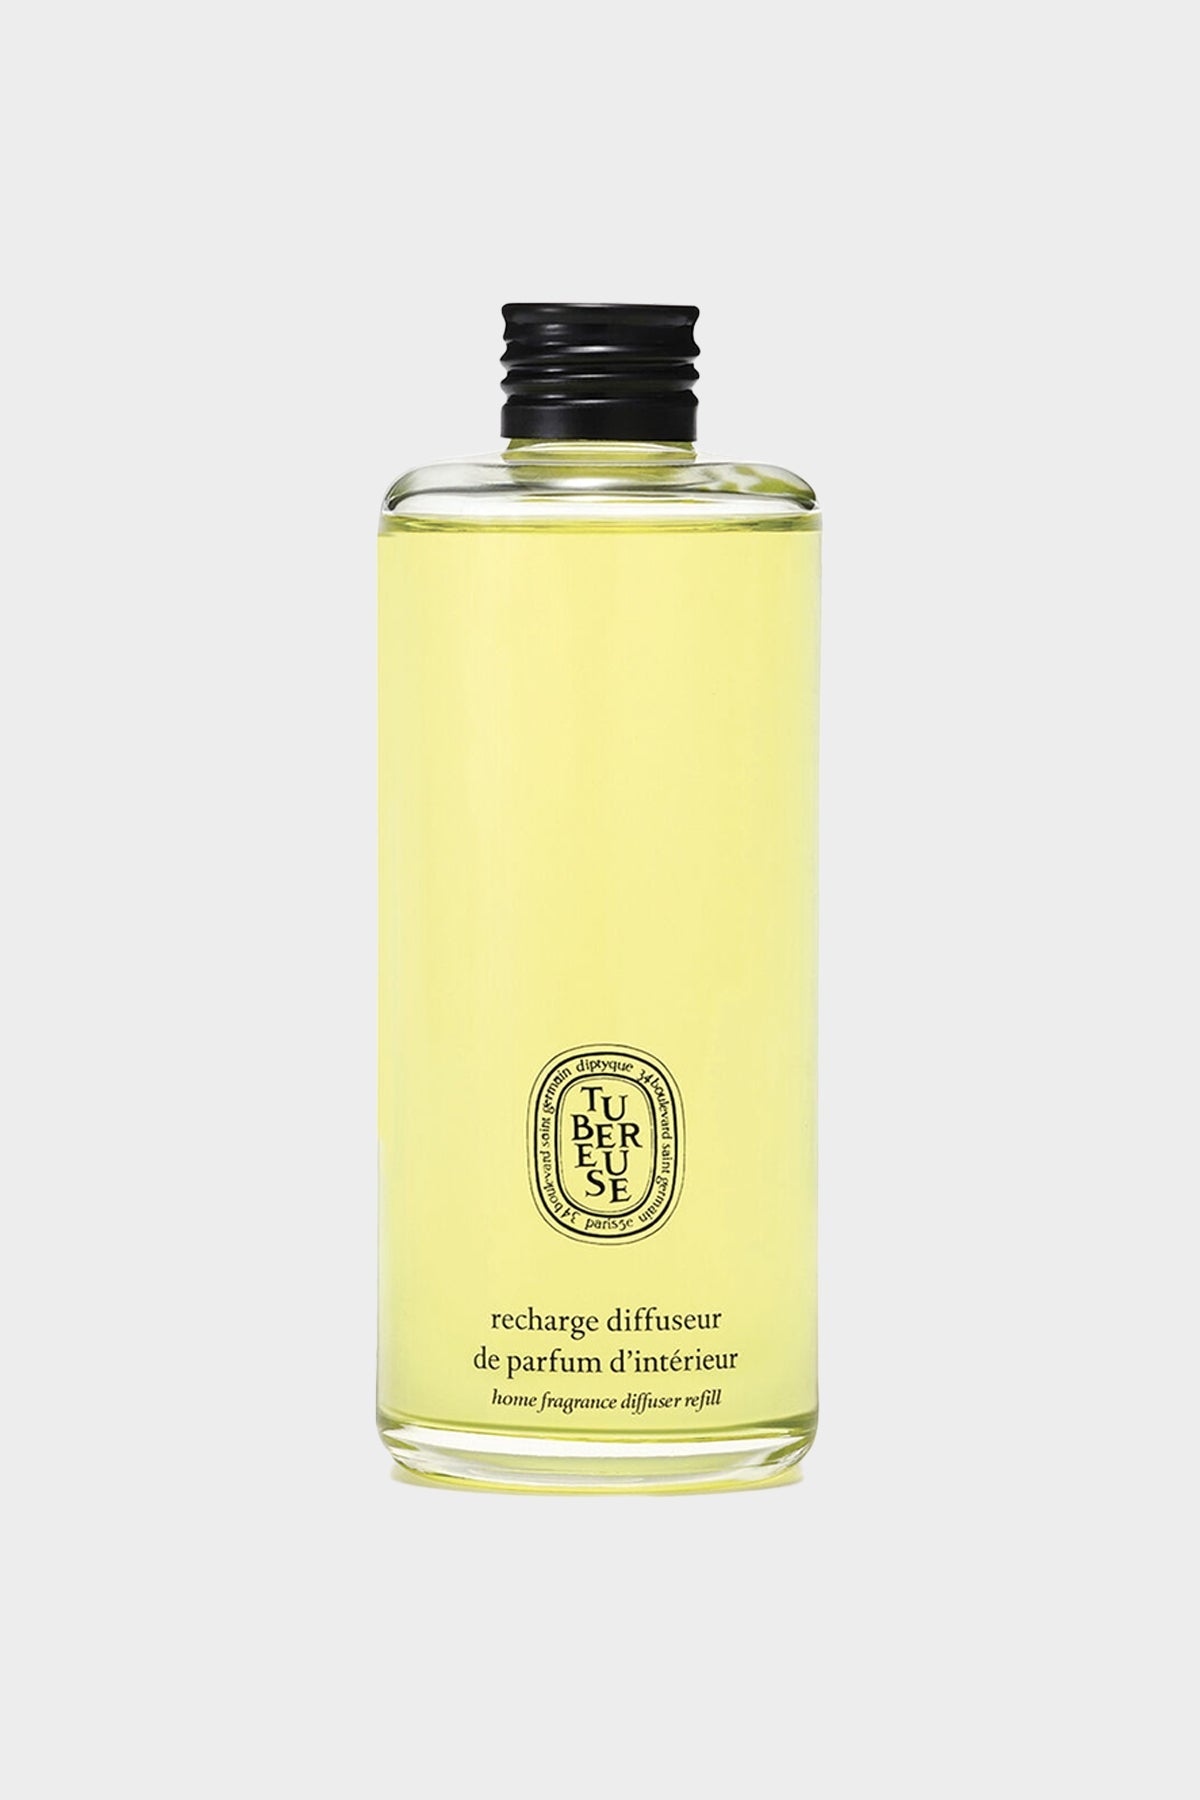 Tuberose Home Fragrance Diffuser Refill - shop-olivia.com